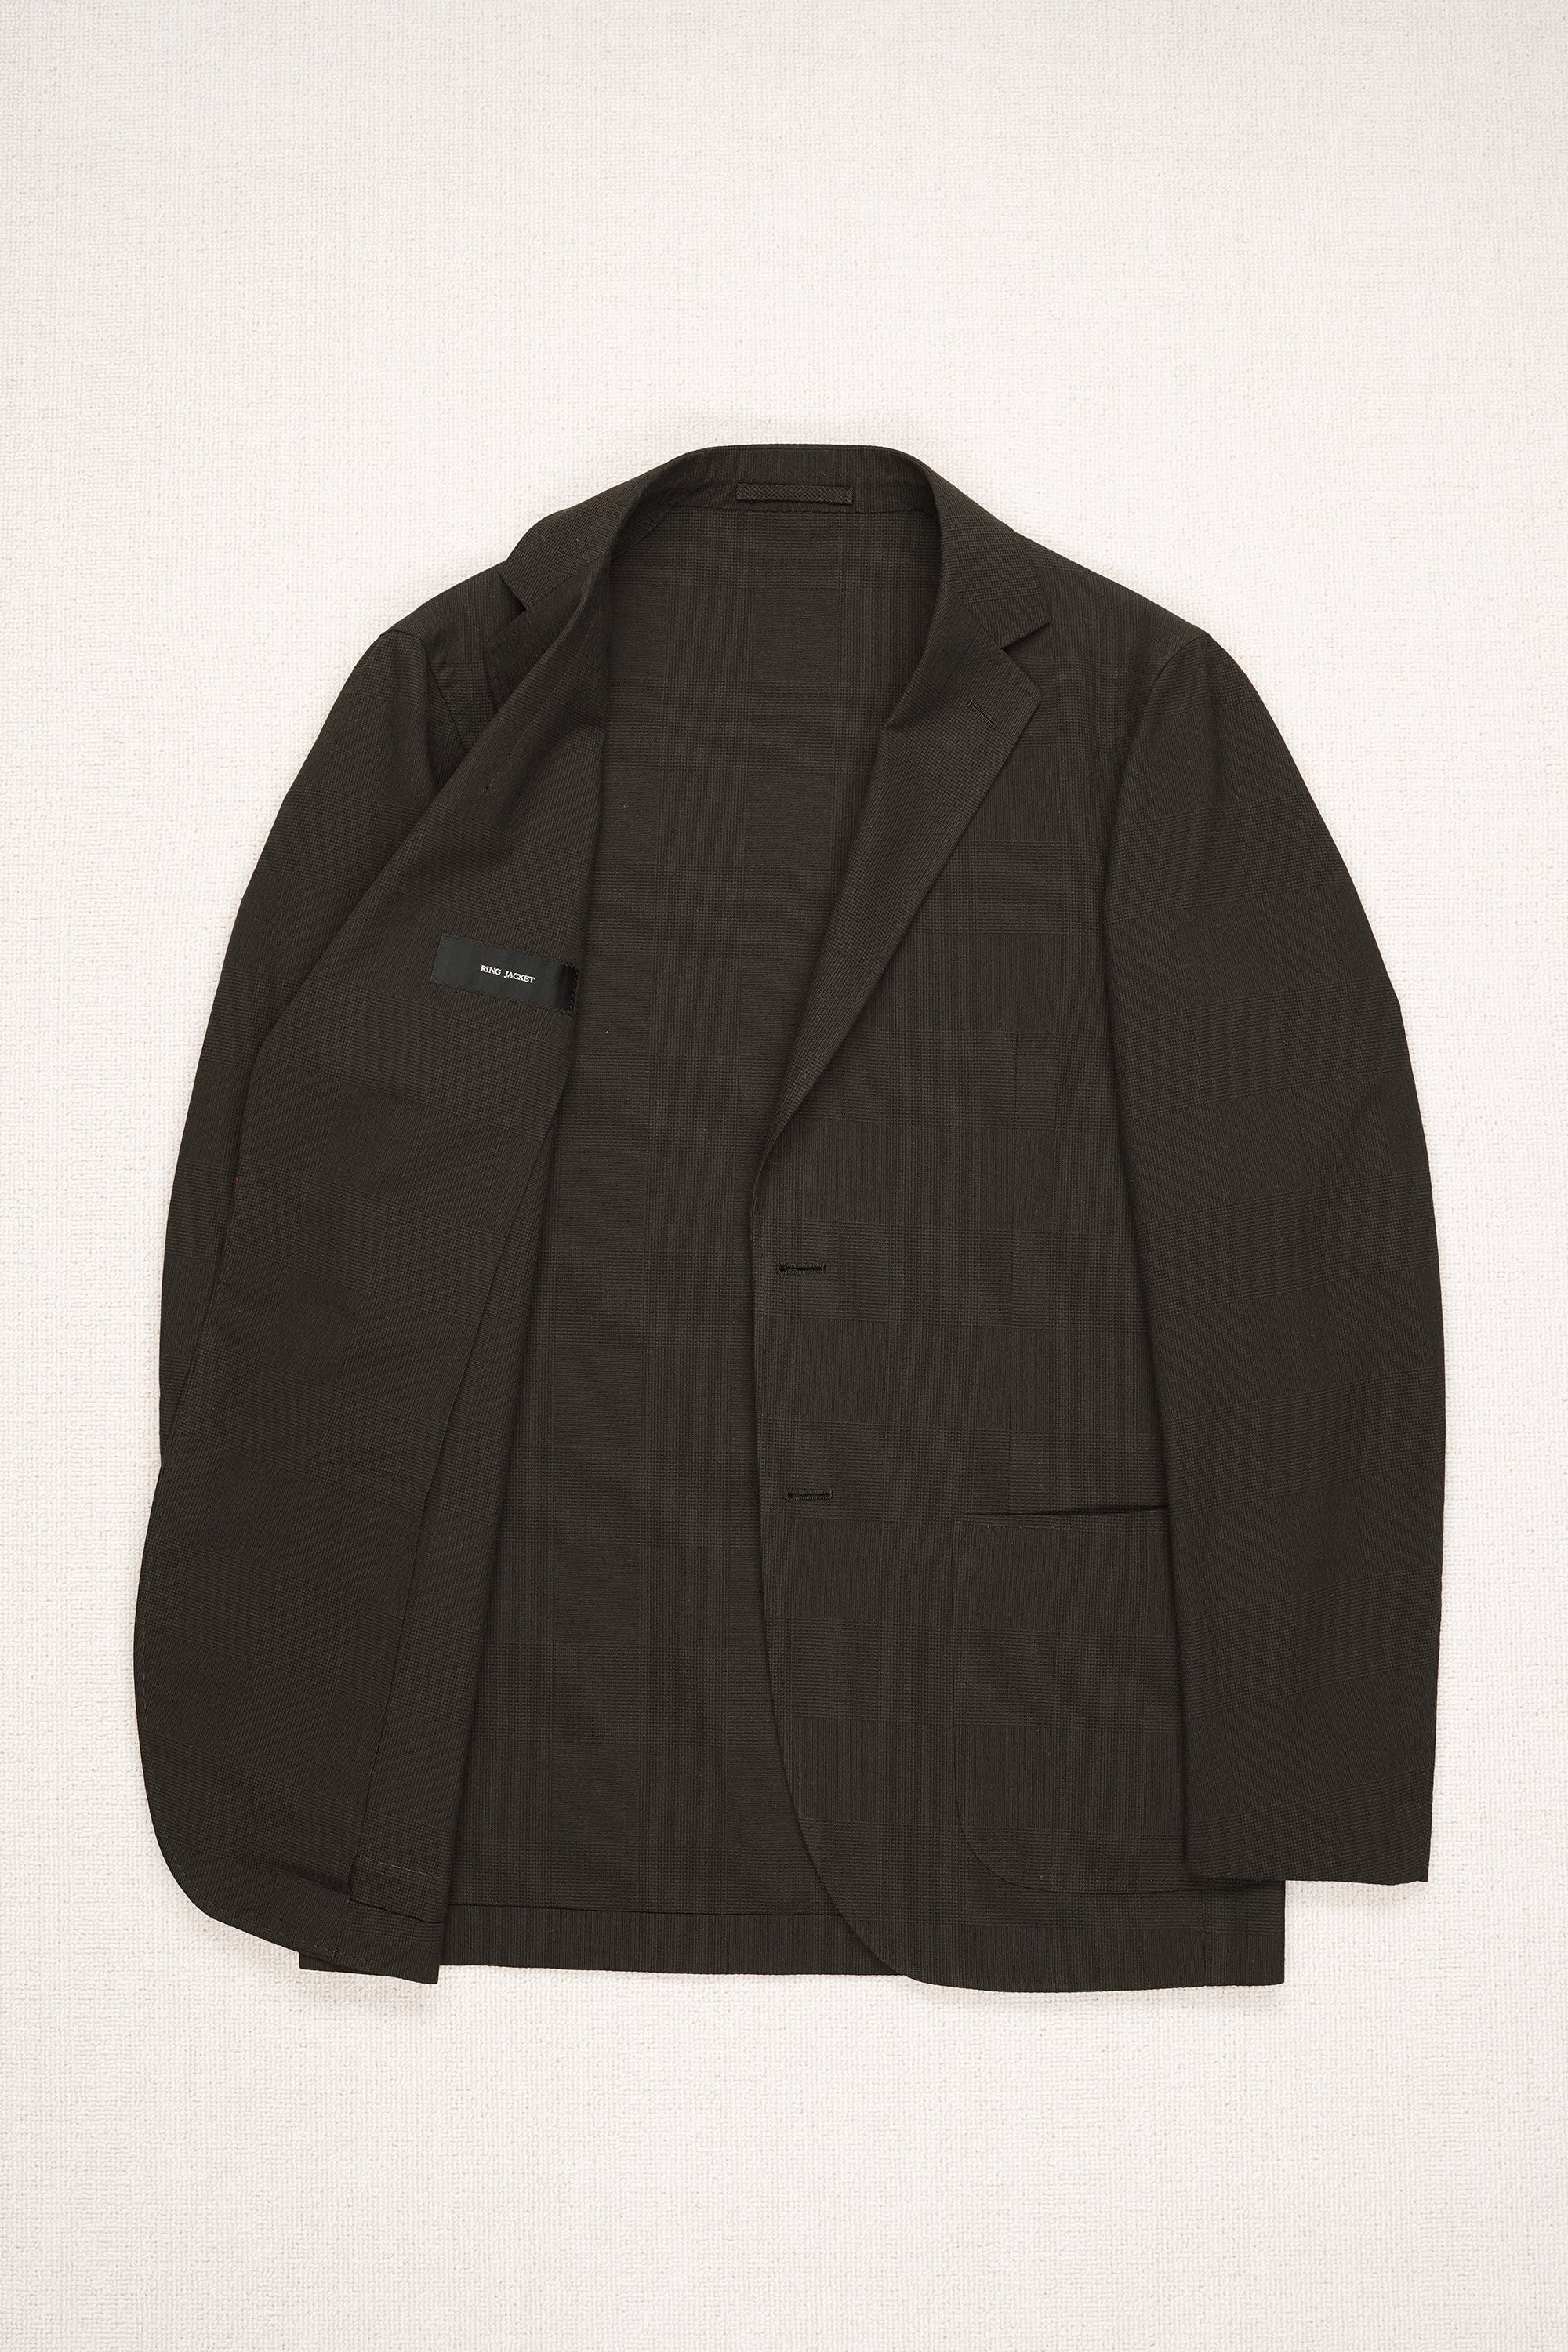 Ring Jacket Model 298 Dark Brown Prince of Wales Check Cotton/Wool Sport Coat